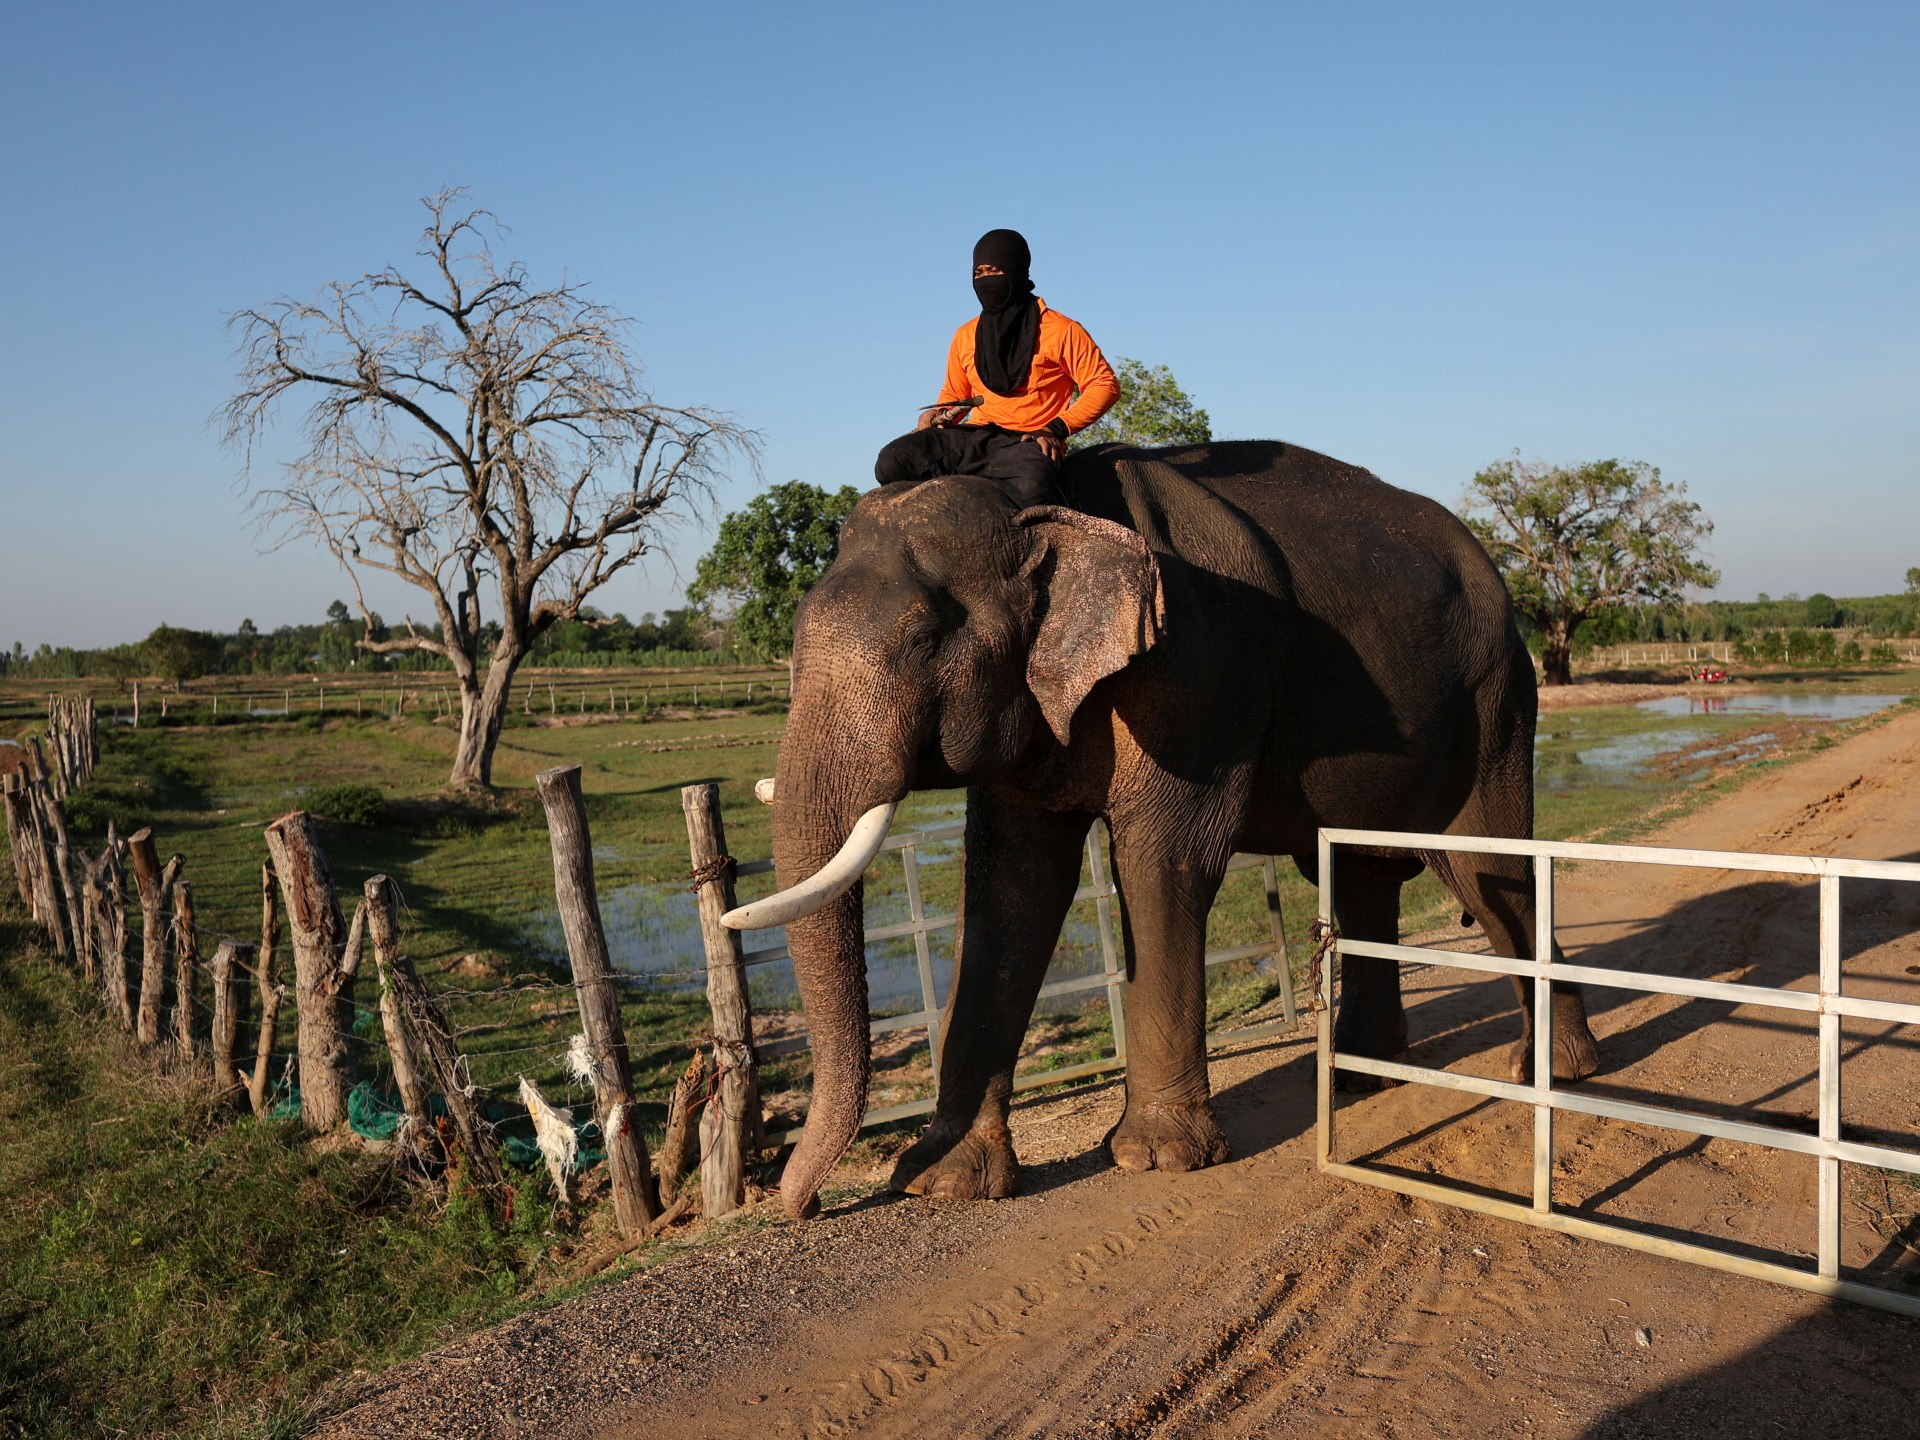 Photos: Thailand's out-of-work elephants in crisis | Tourism | Al Jazeera